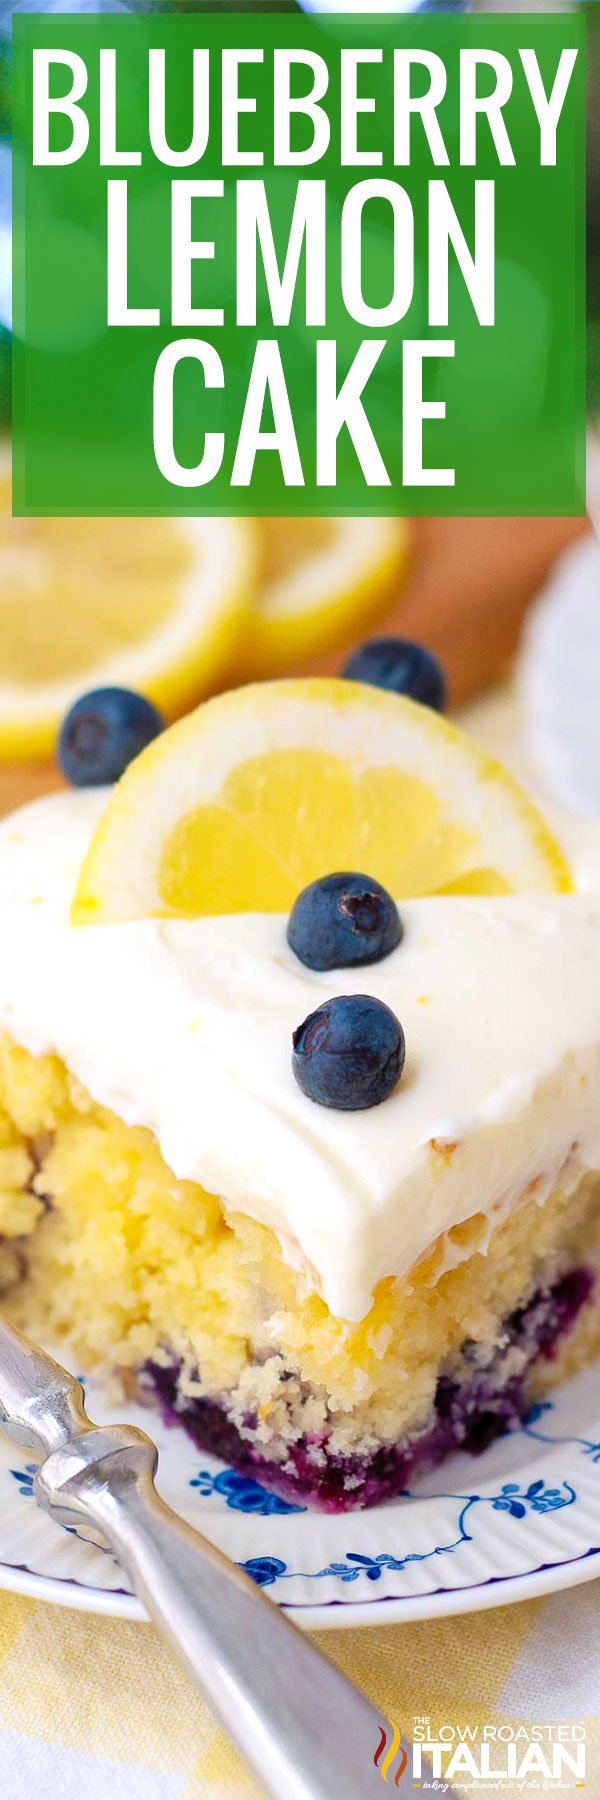 titled collage for blueberry lemon cake recipe